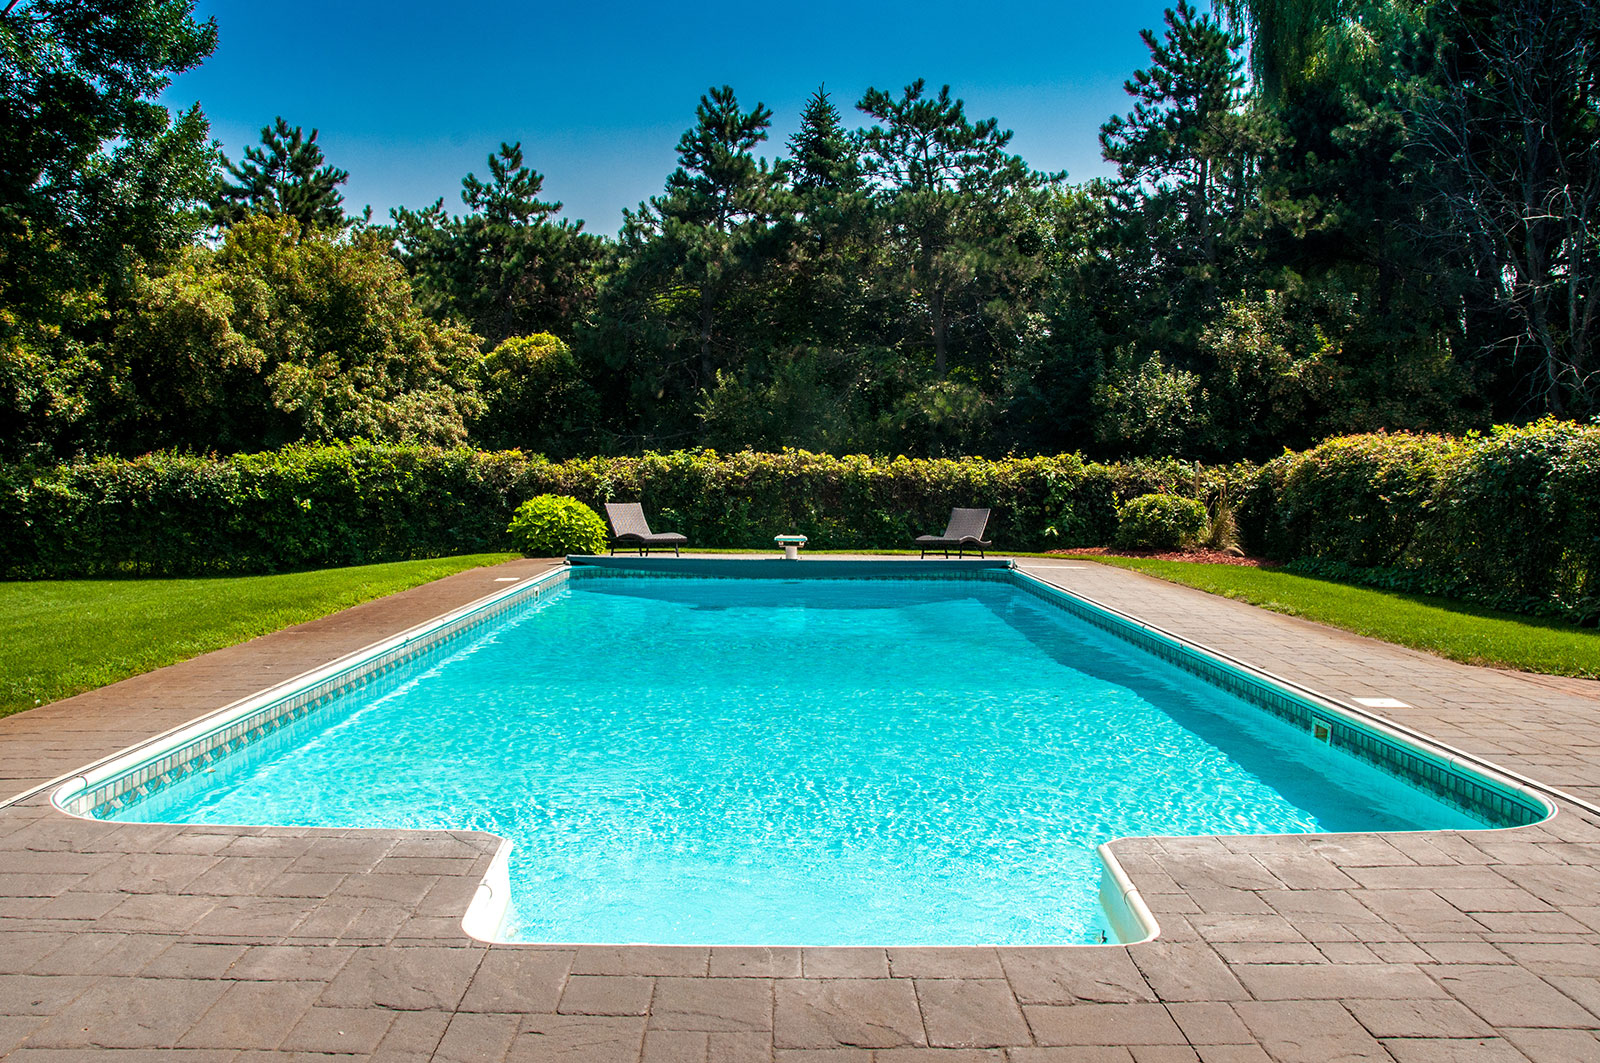 Best pool shape for small backyard